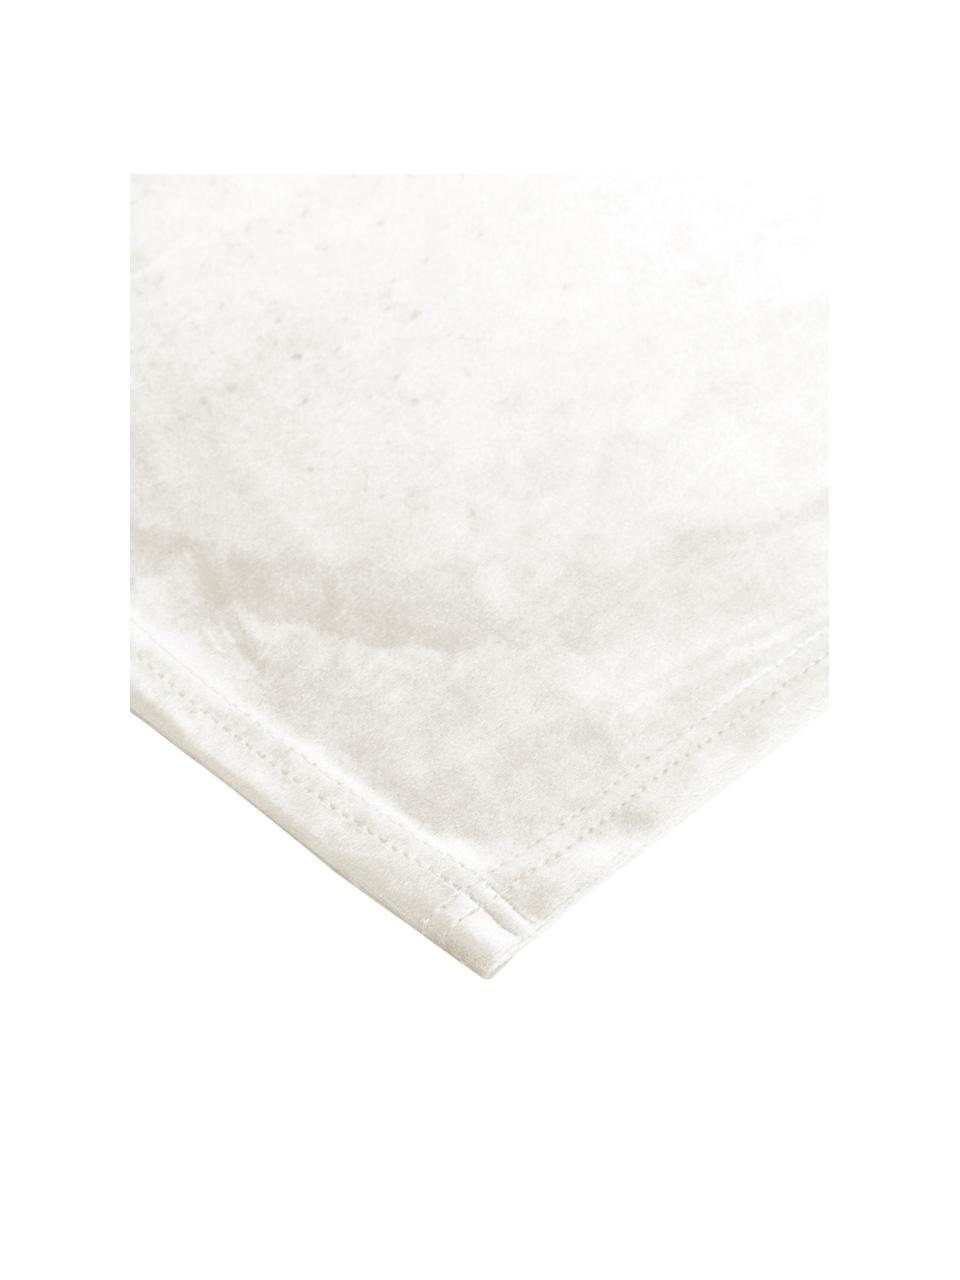 Fluwelen placemats Simone, 2 stuks, 100% polyester fluweel, Wit, 35 x 45 cm